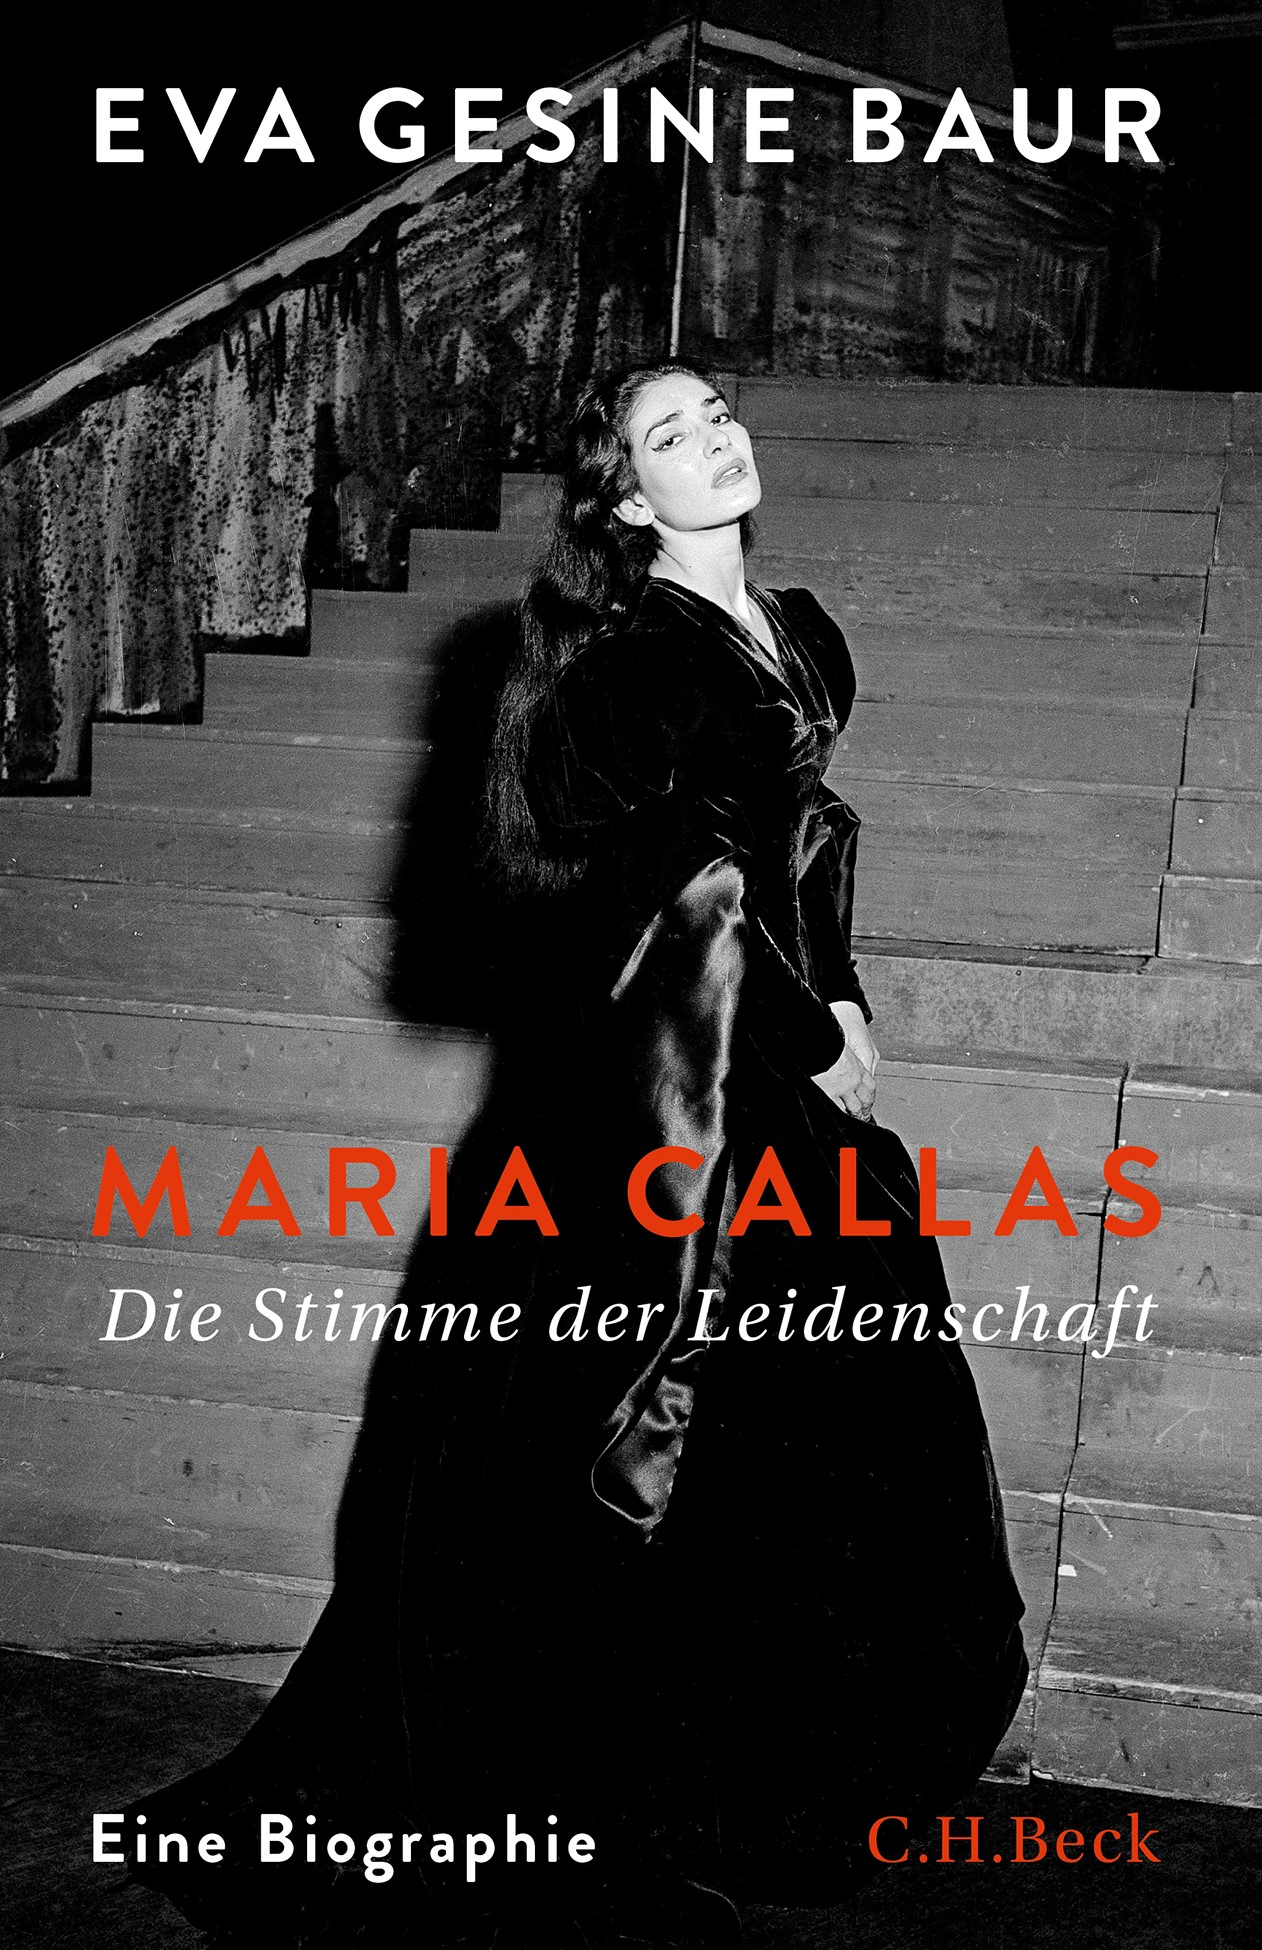 <p style="text-align: center;"><br>"Eva Gesine Baur schildert feinsinnig und fesselnd Callas` Weg zum Weltruhm... Ein Buch, das berührt."<br><em>Gala<br><br></em>„Ein Buch, an dem Opernfreunde nicht vorbei kommen.“<br><em> Stuttgarter Zeitung</em>
 
<p style="text-align: center;"><em> </em>